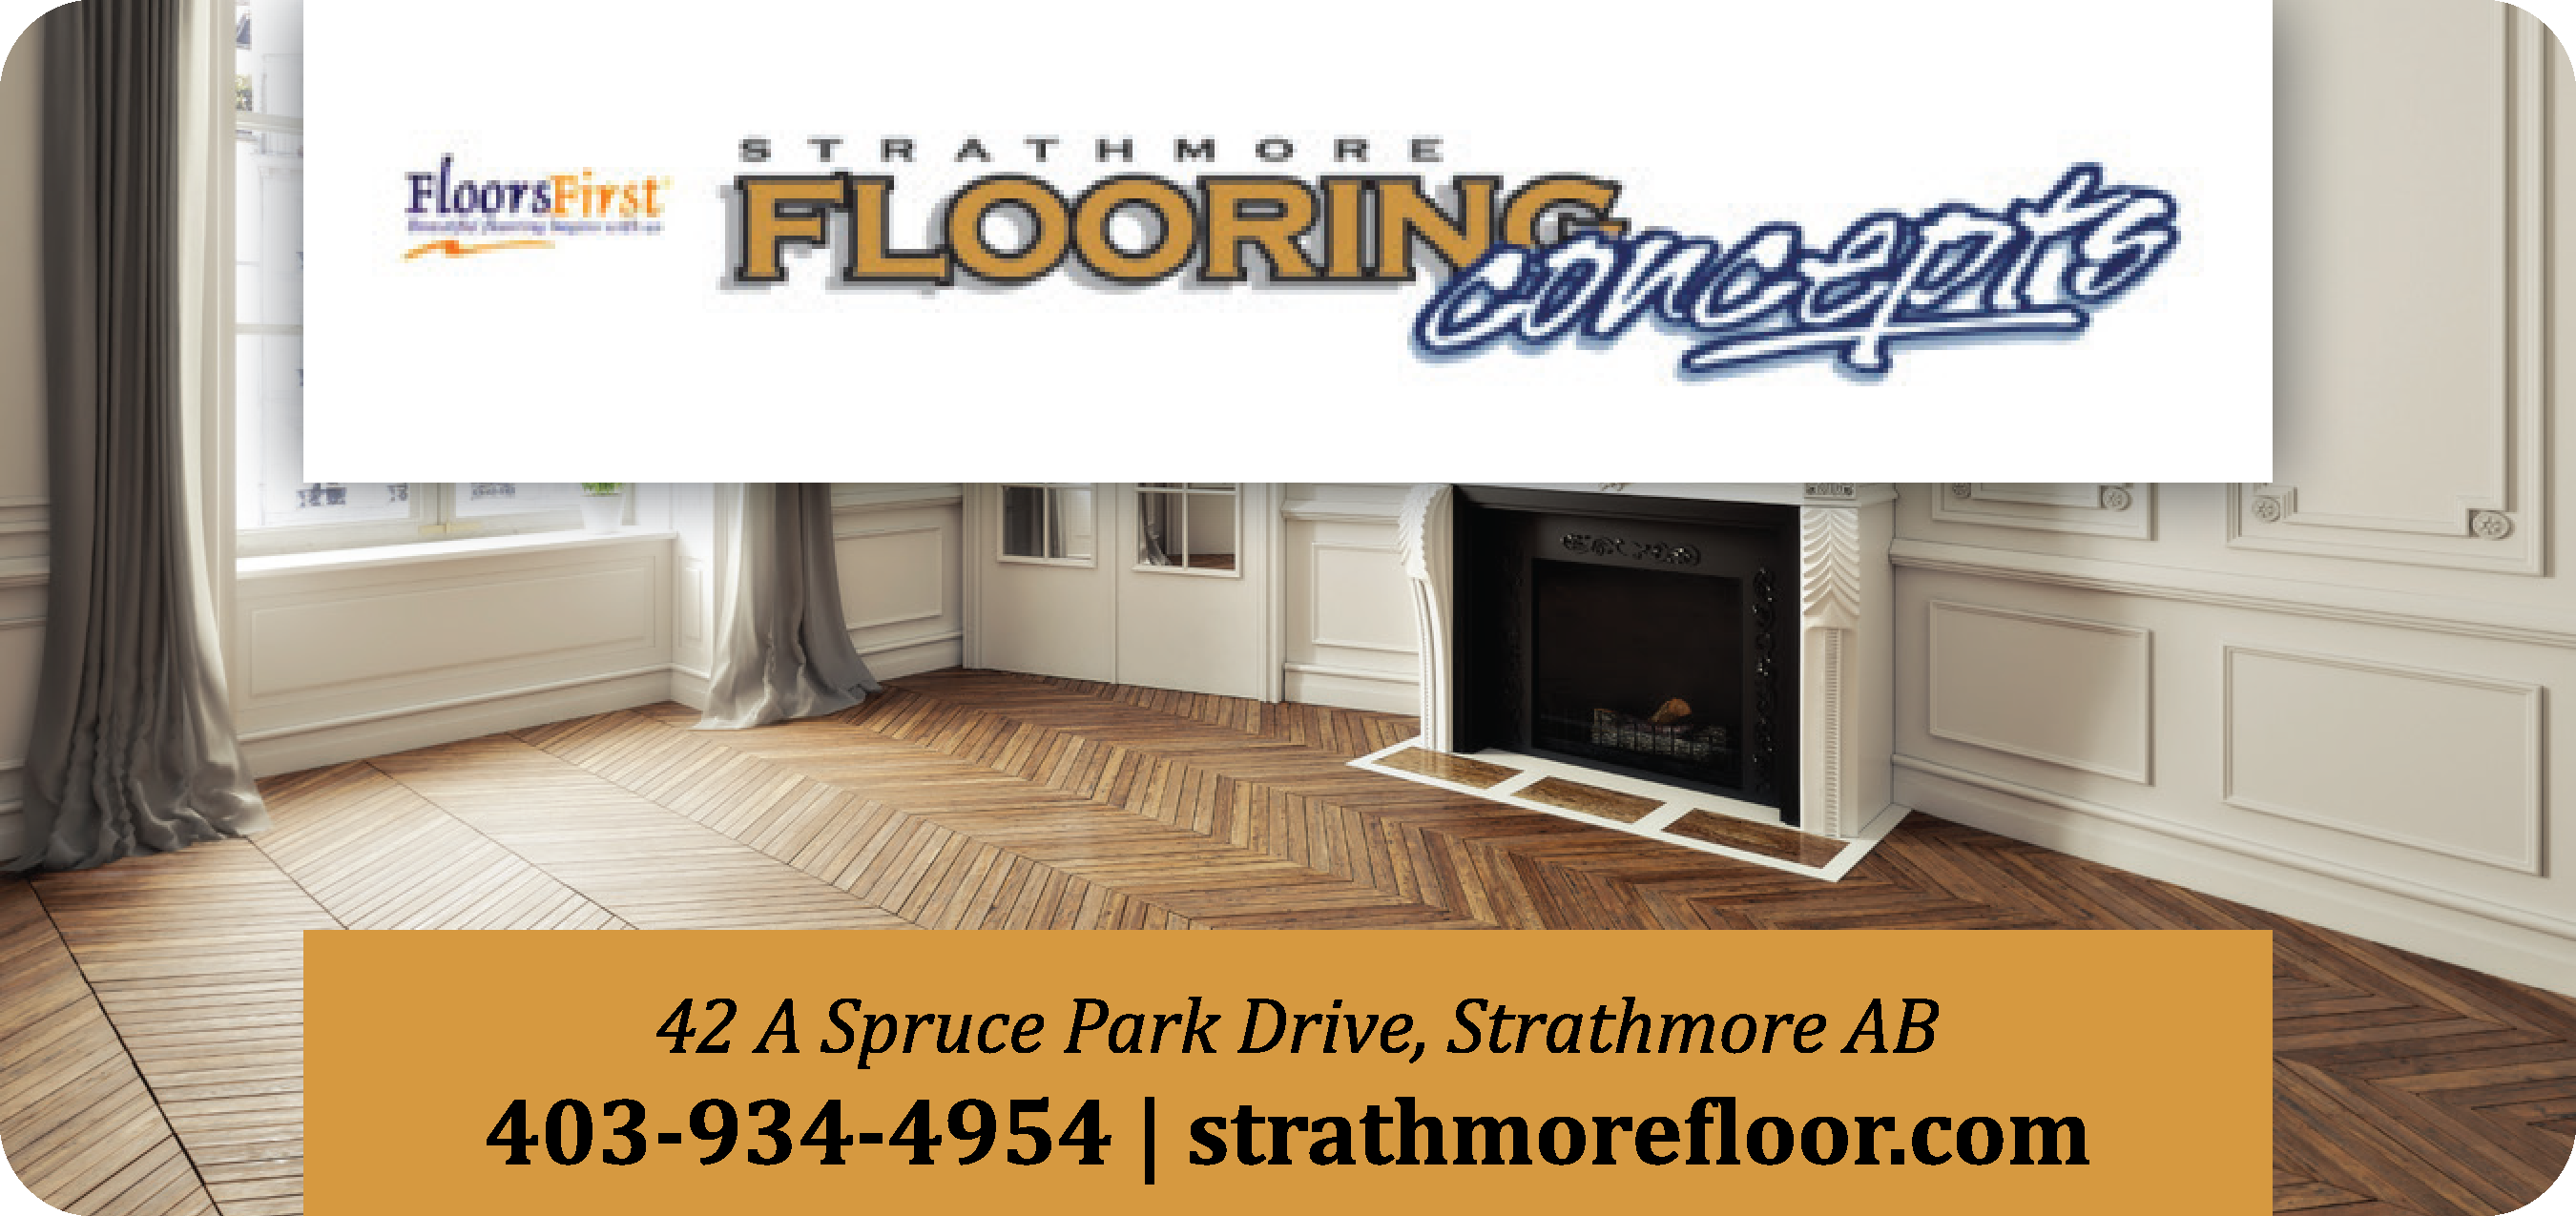 Strathmore Flooring Concepts Inc